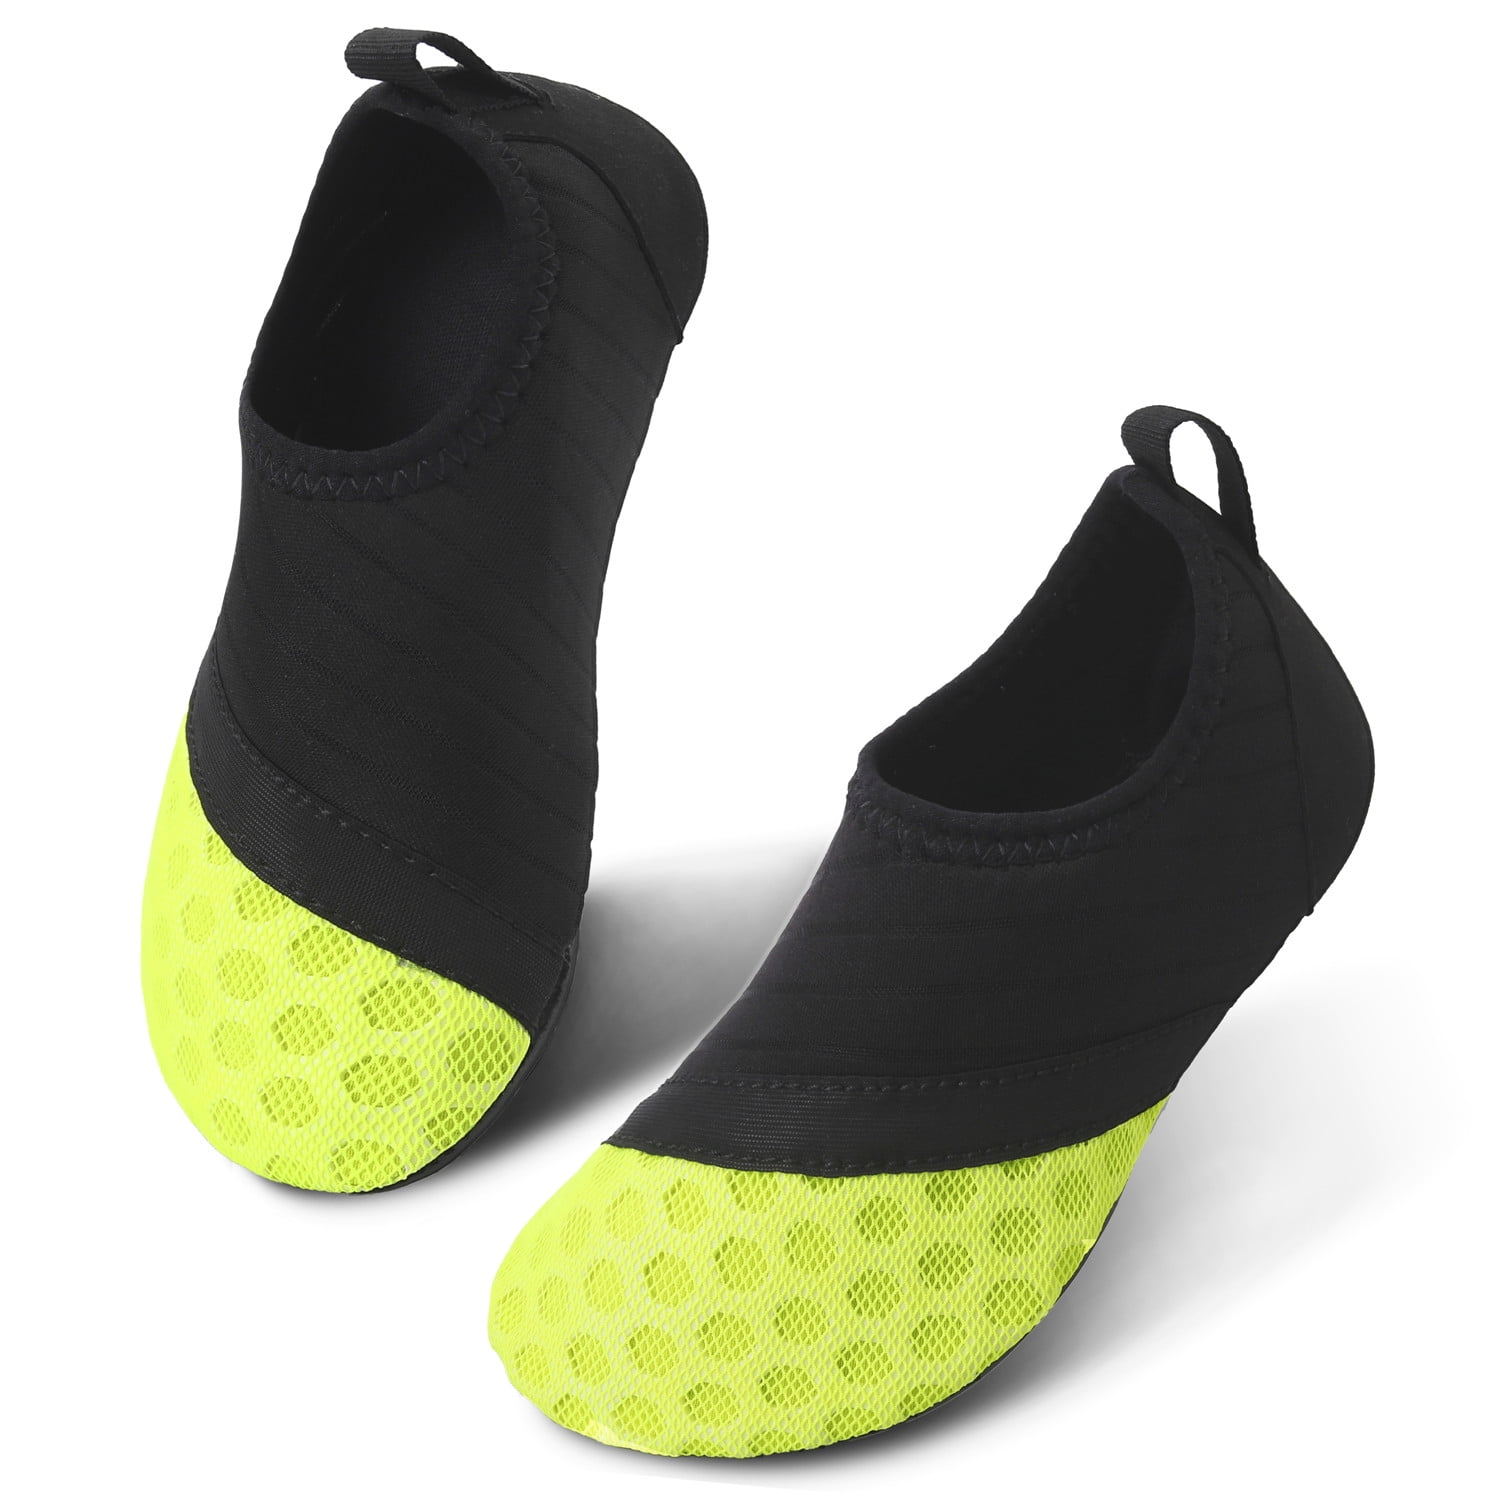 L-RUN Girls Boys Water Shoes Soft Barefoot Shoes Quick-Dry Aqua Socks Green 6-12 Month=EU17-18